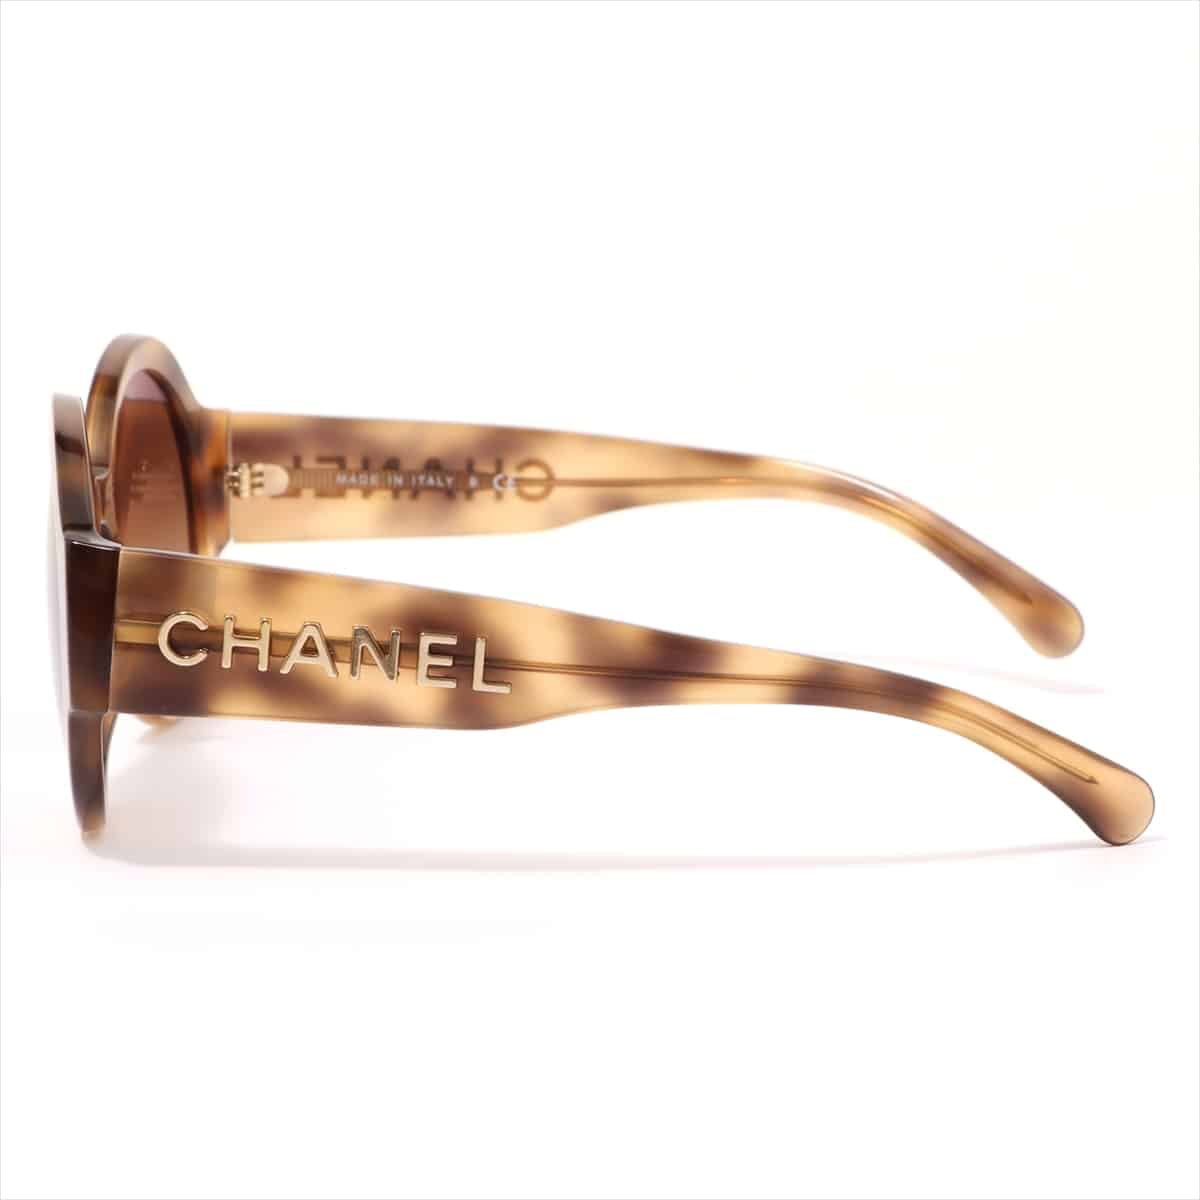 Chanel 5410-A Sunglass Plastic Brown